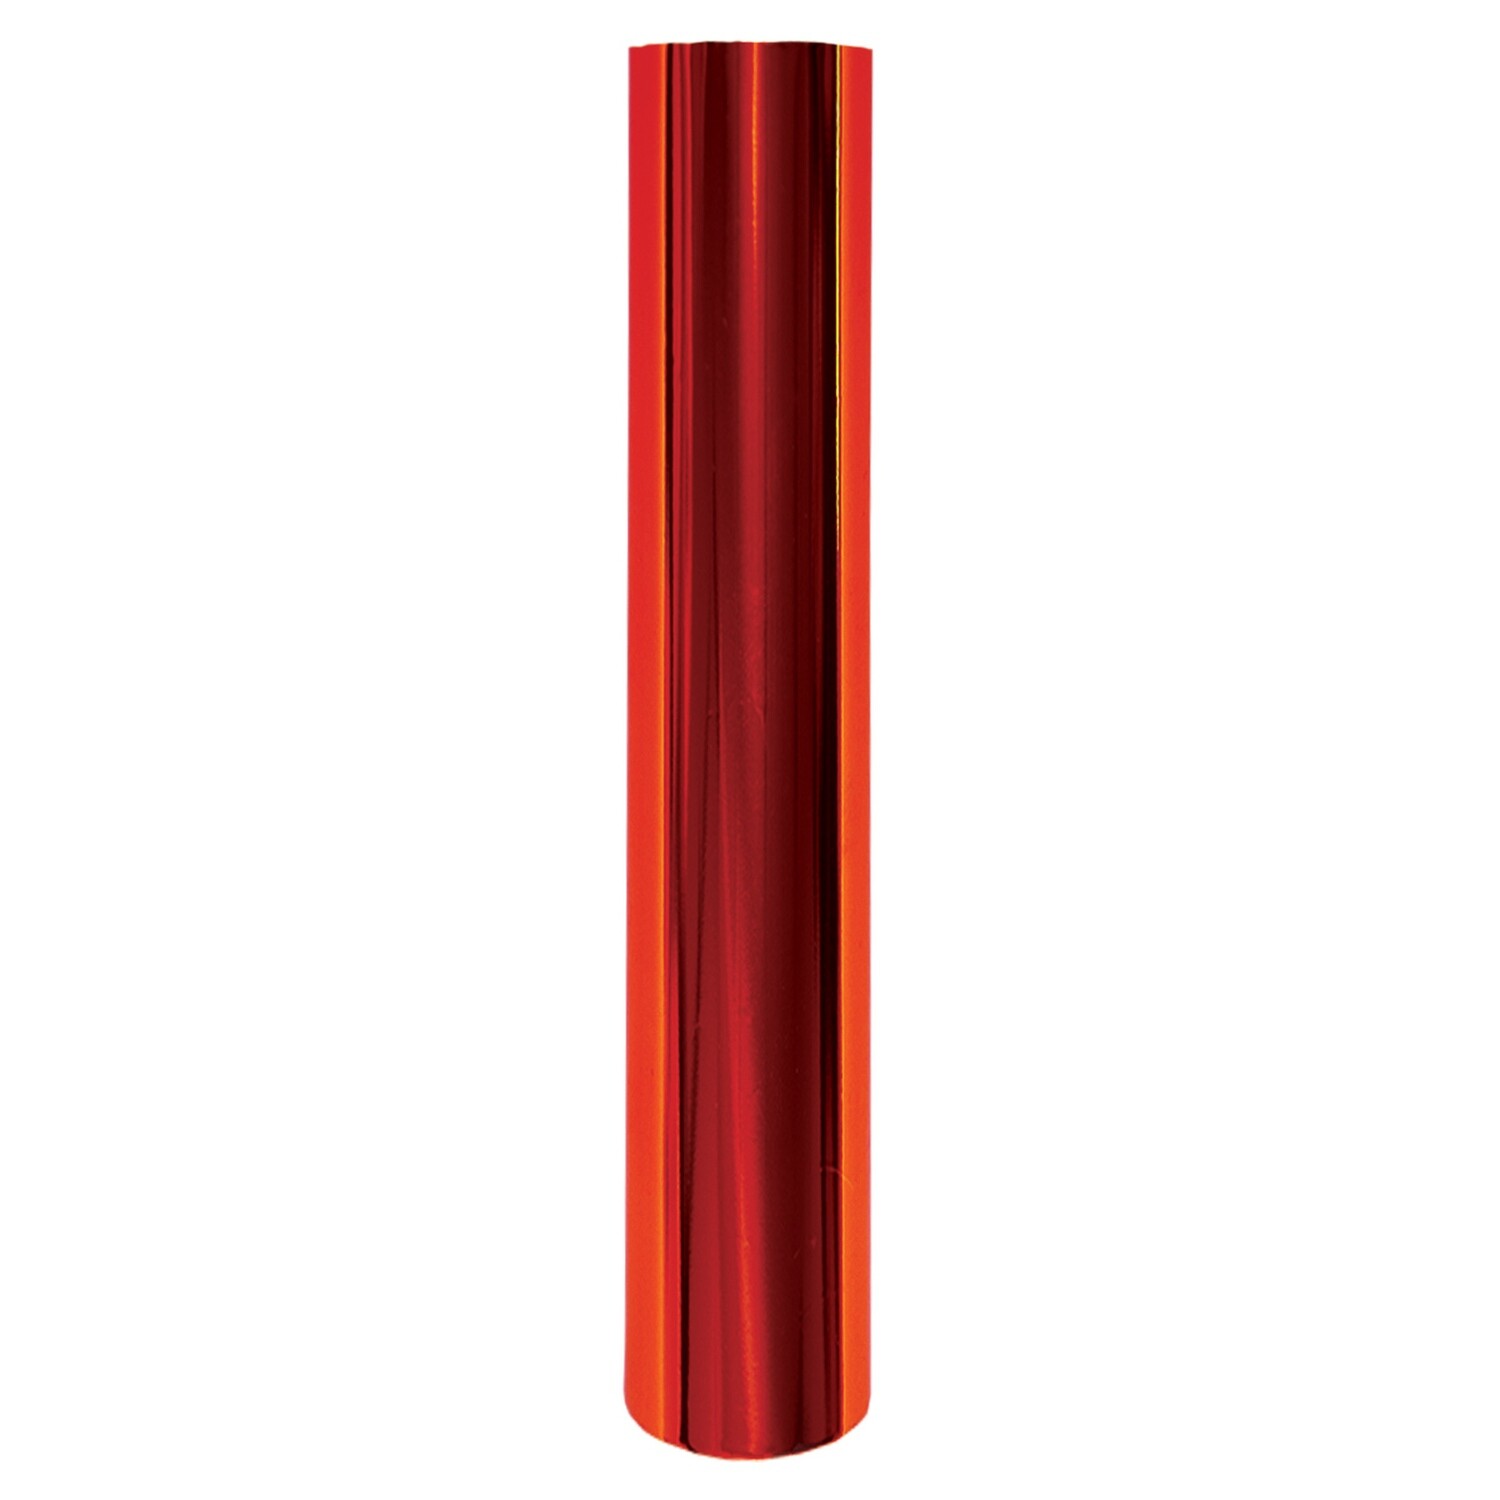 Spellbinders Glimmer Hot Foil Roll - Red